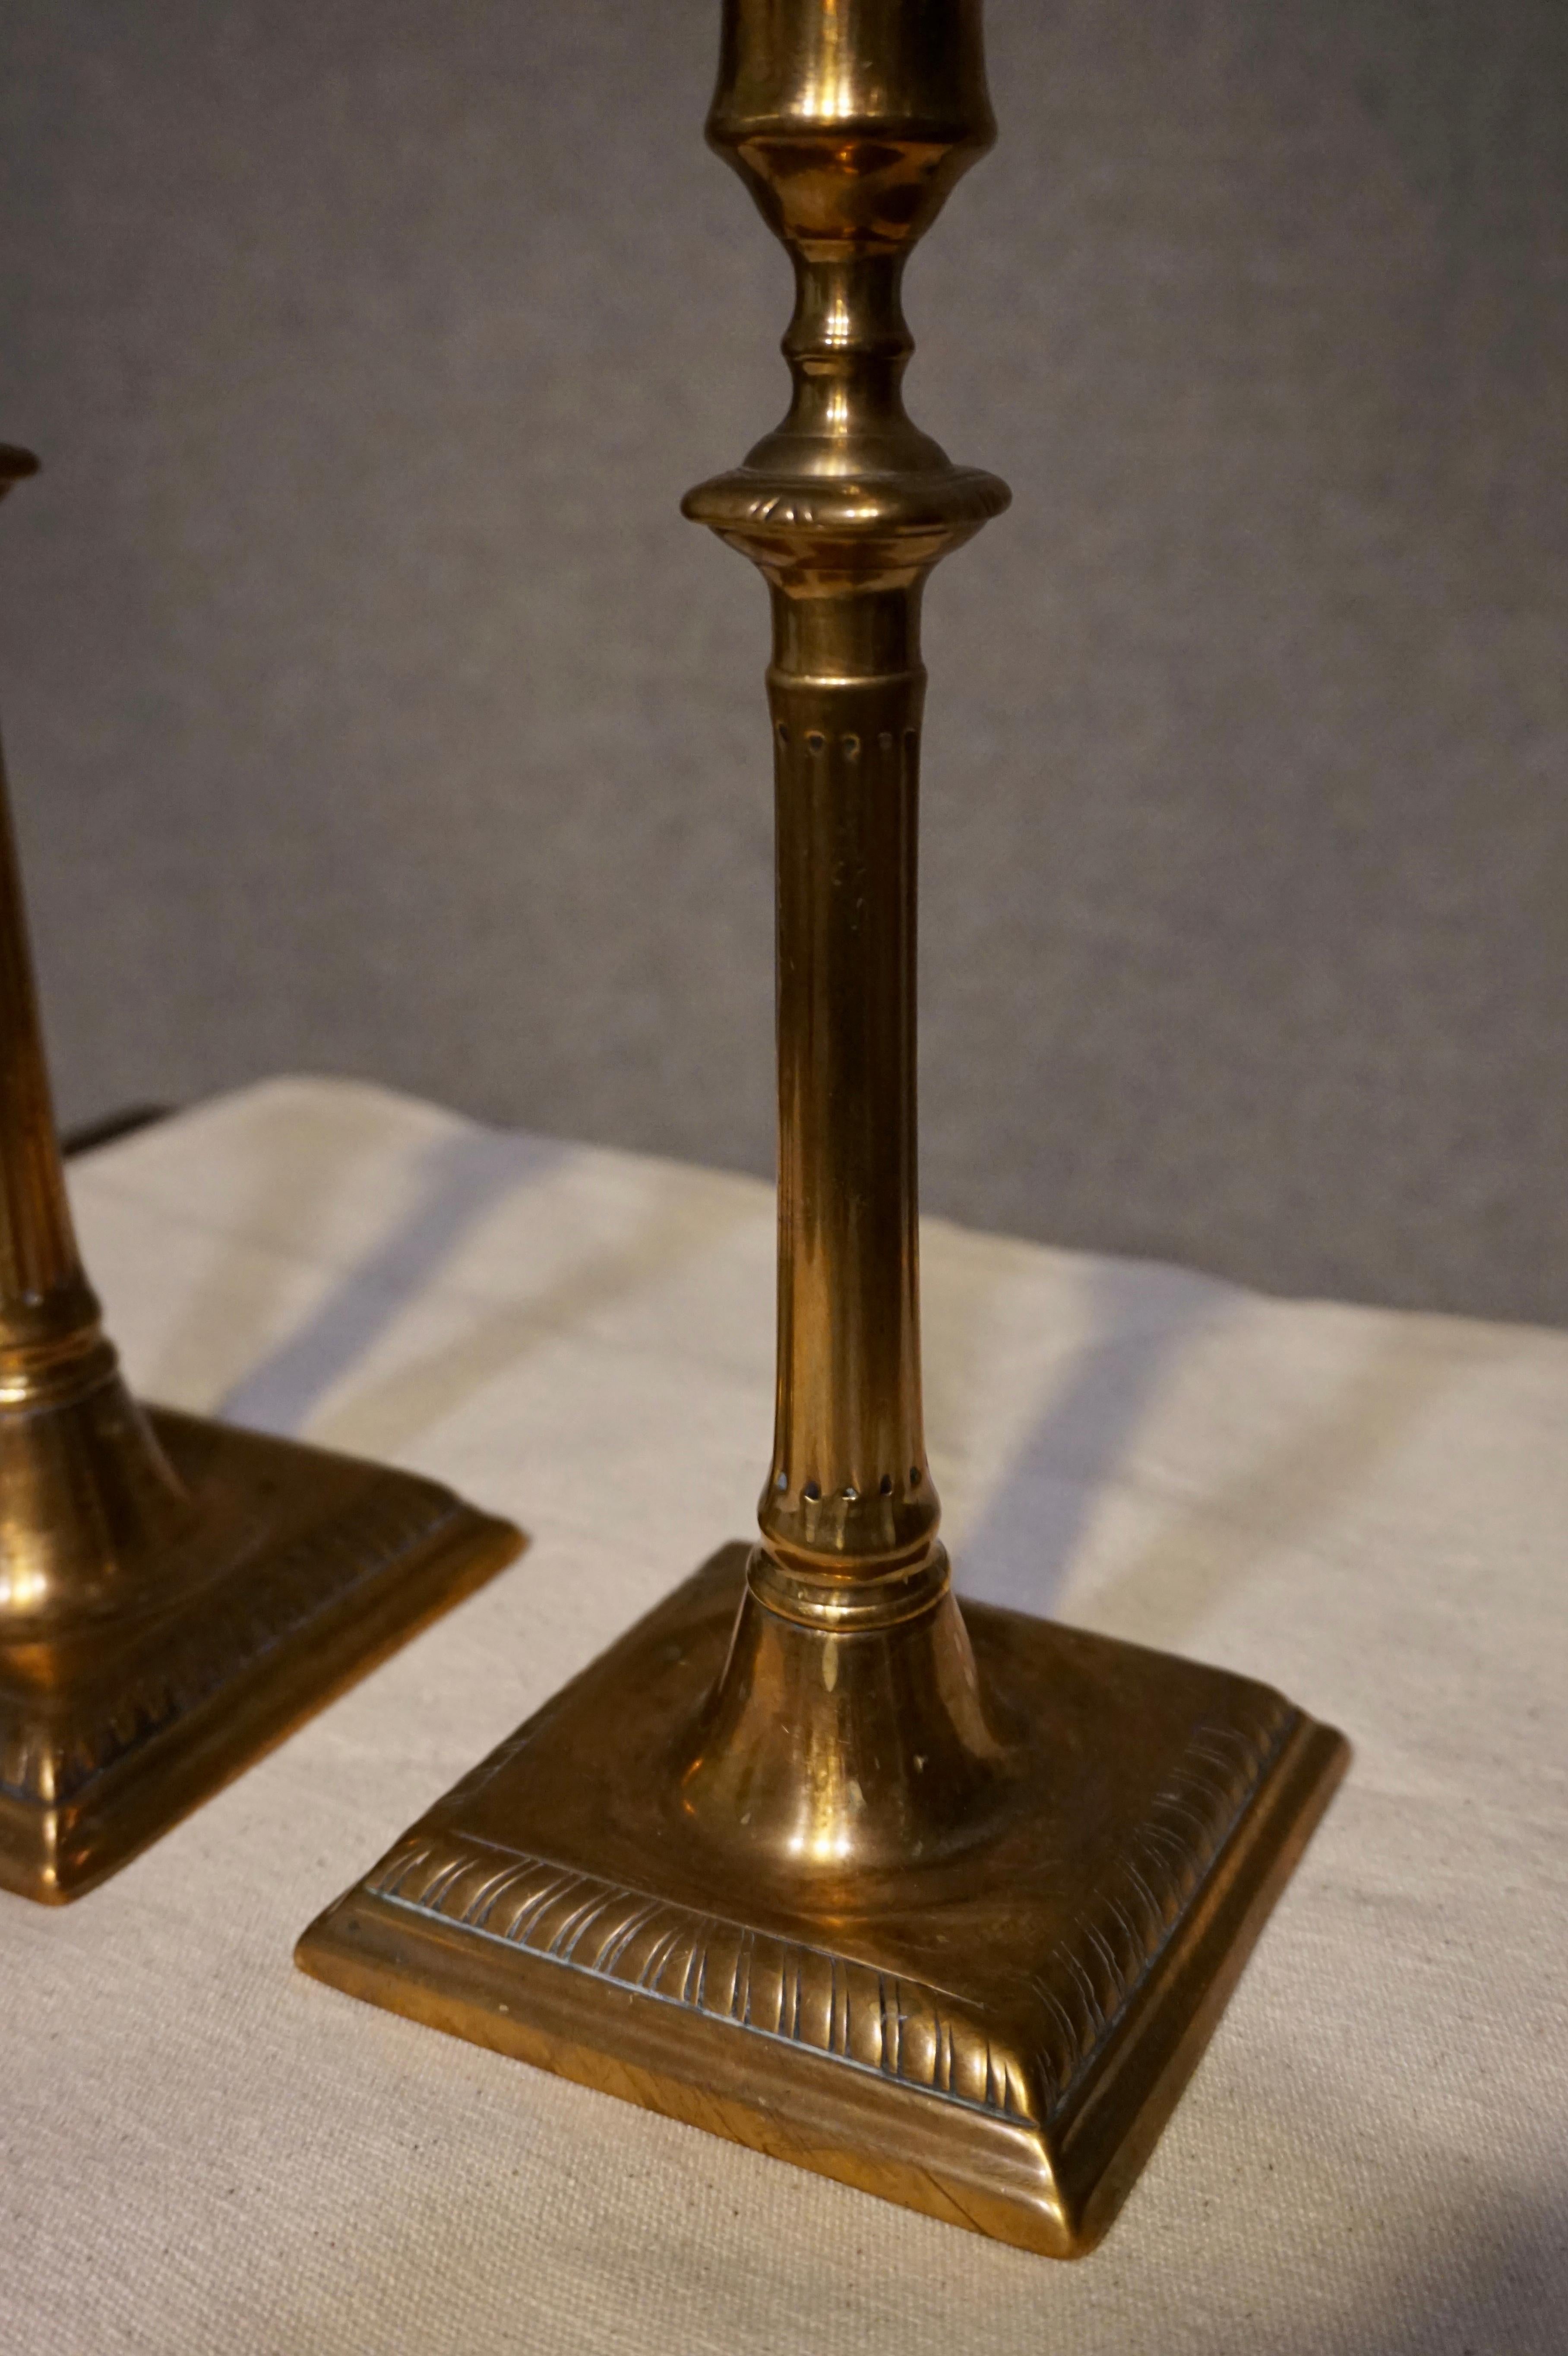 Rare old Georgian brass candlesticks with true patina exuding old world charm,

circa 1790-1800.